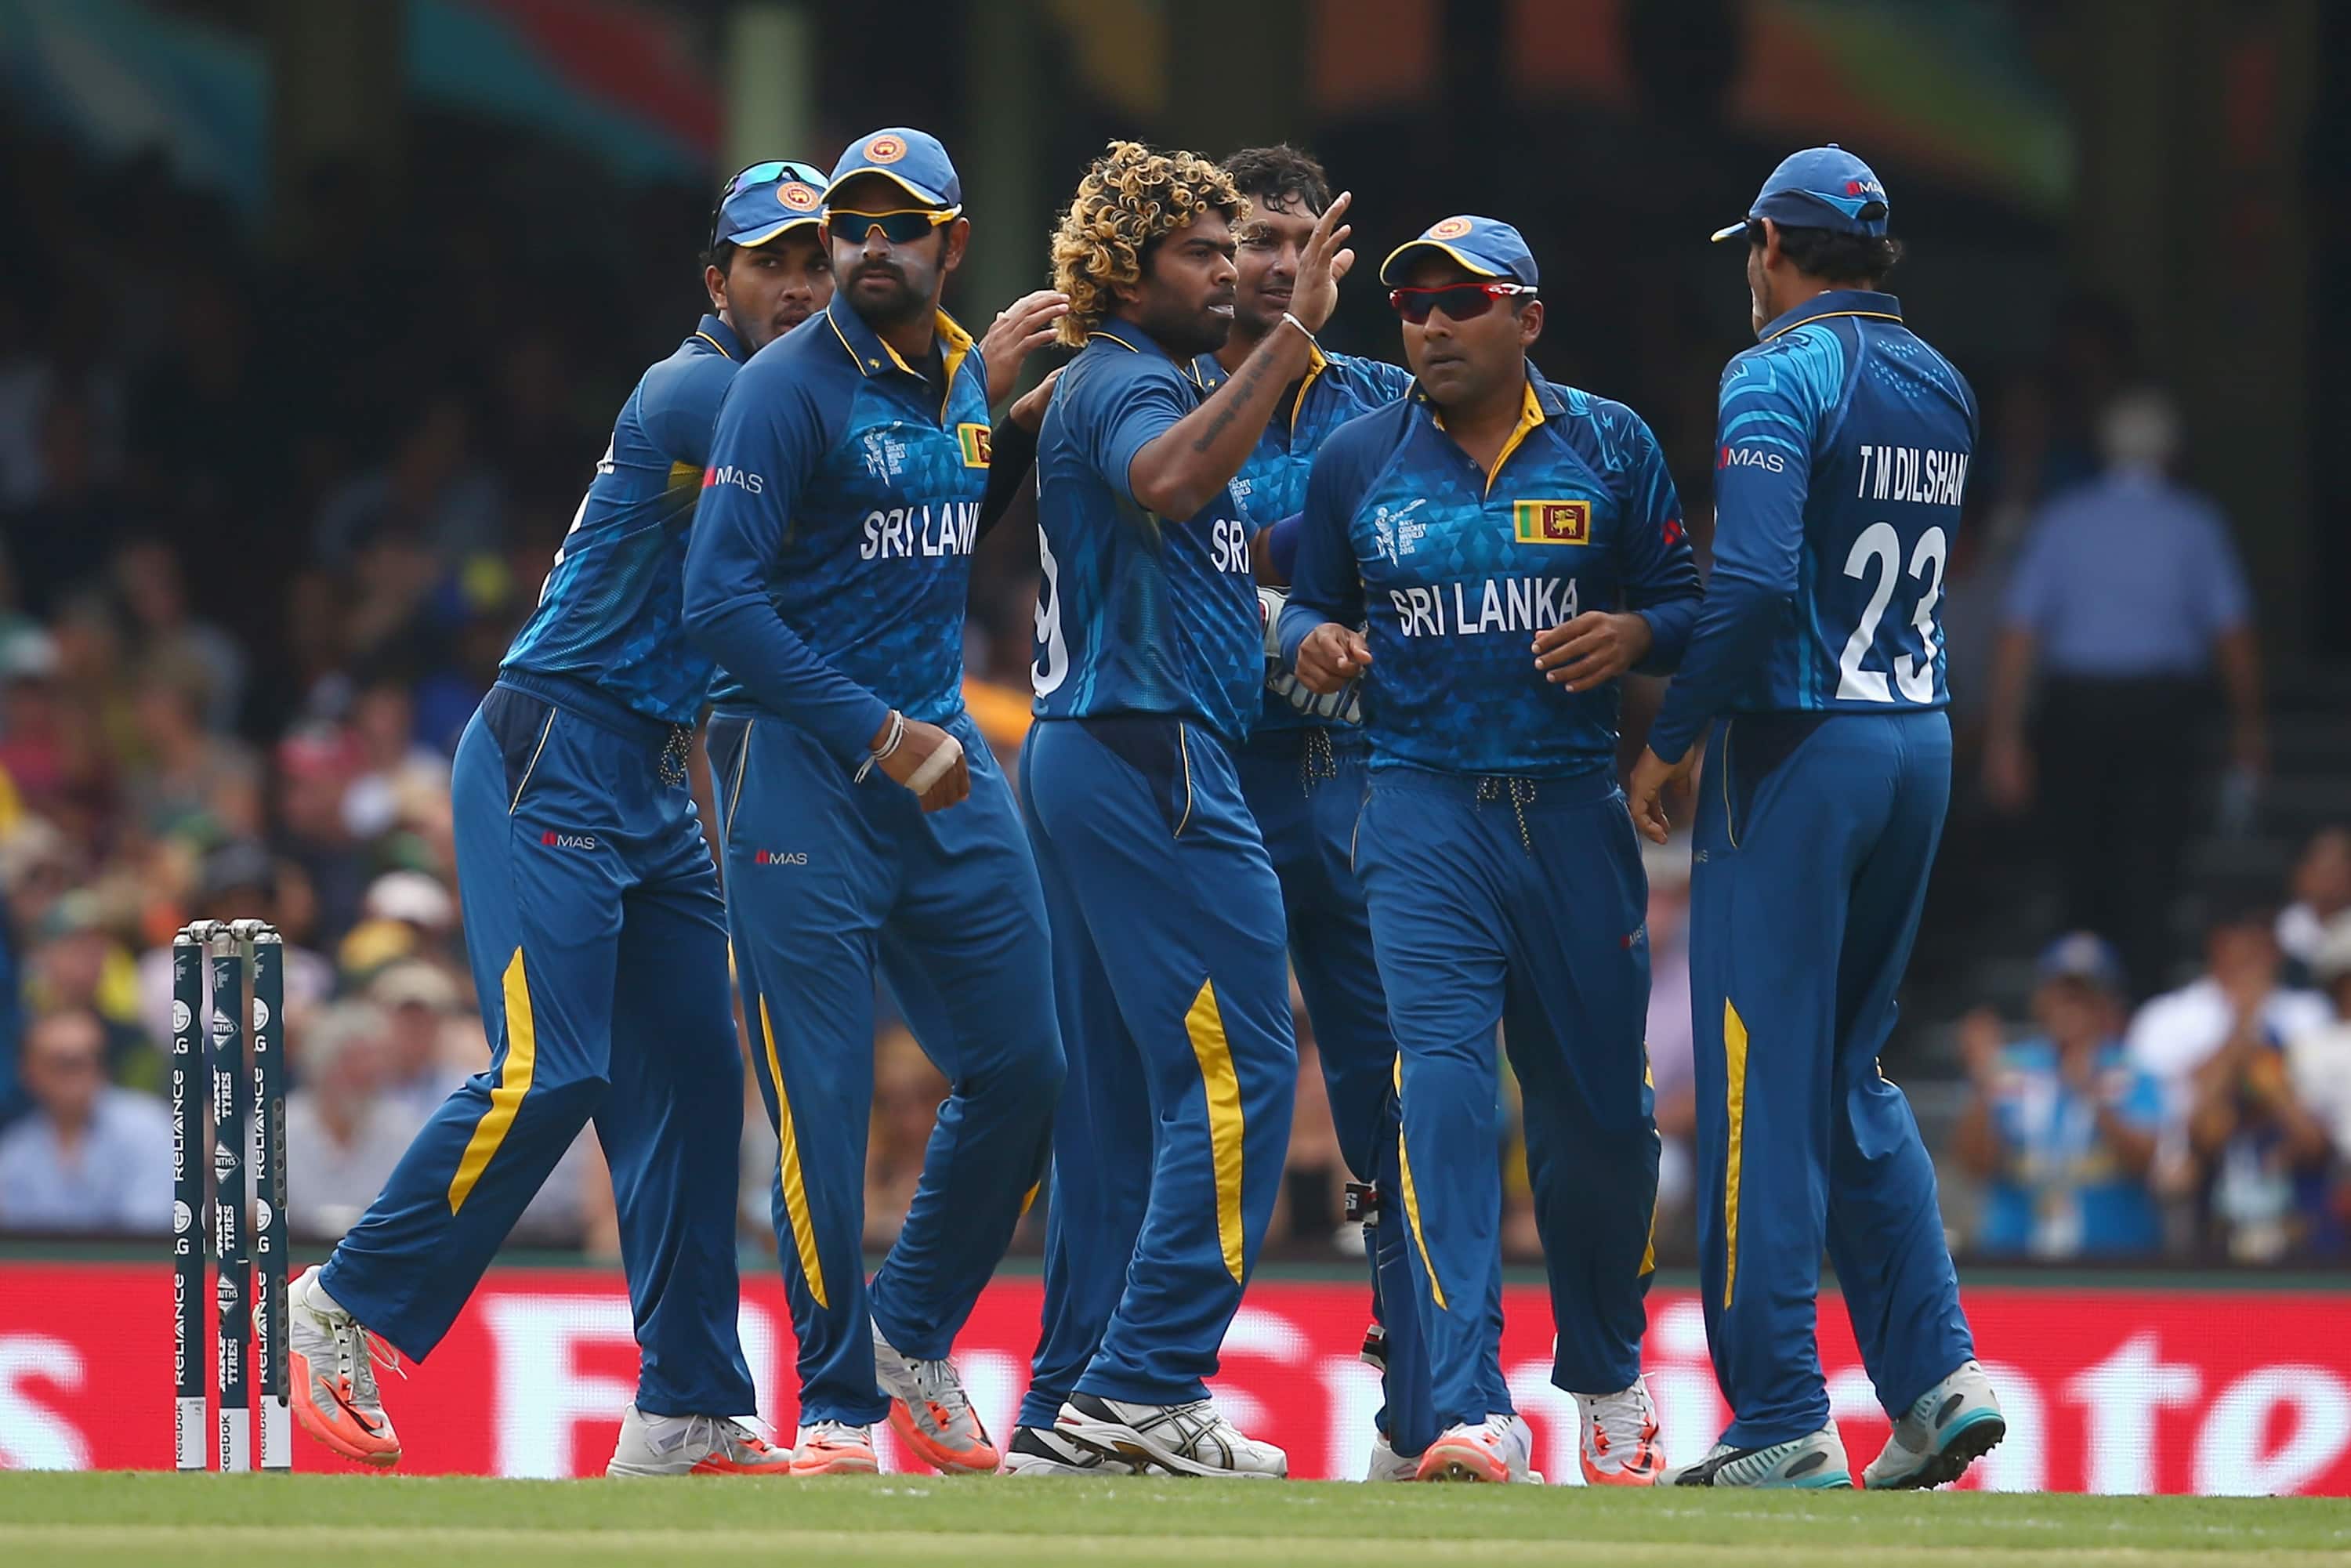 Sri Lanka vs Scotland, ICC Cricket World Cup 2015: 5 match facts - Cricket Country3000 x 2001